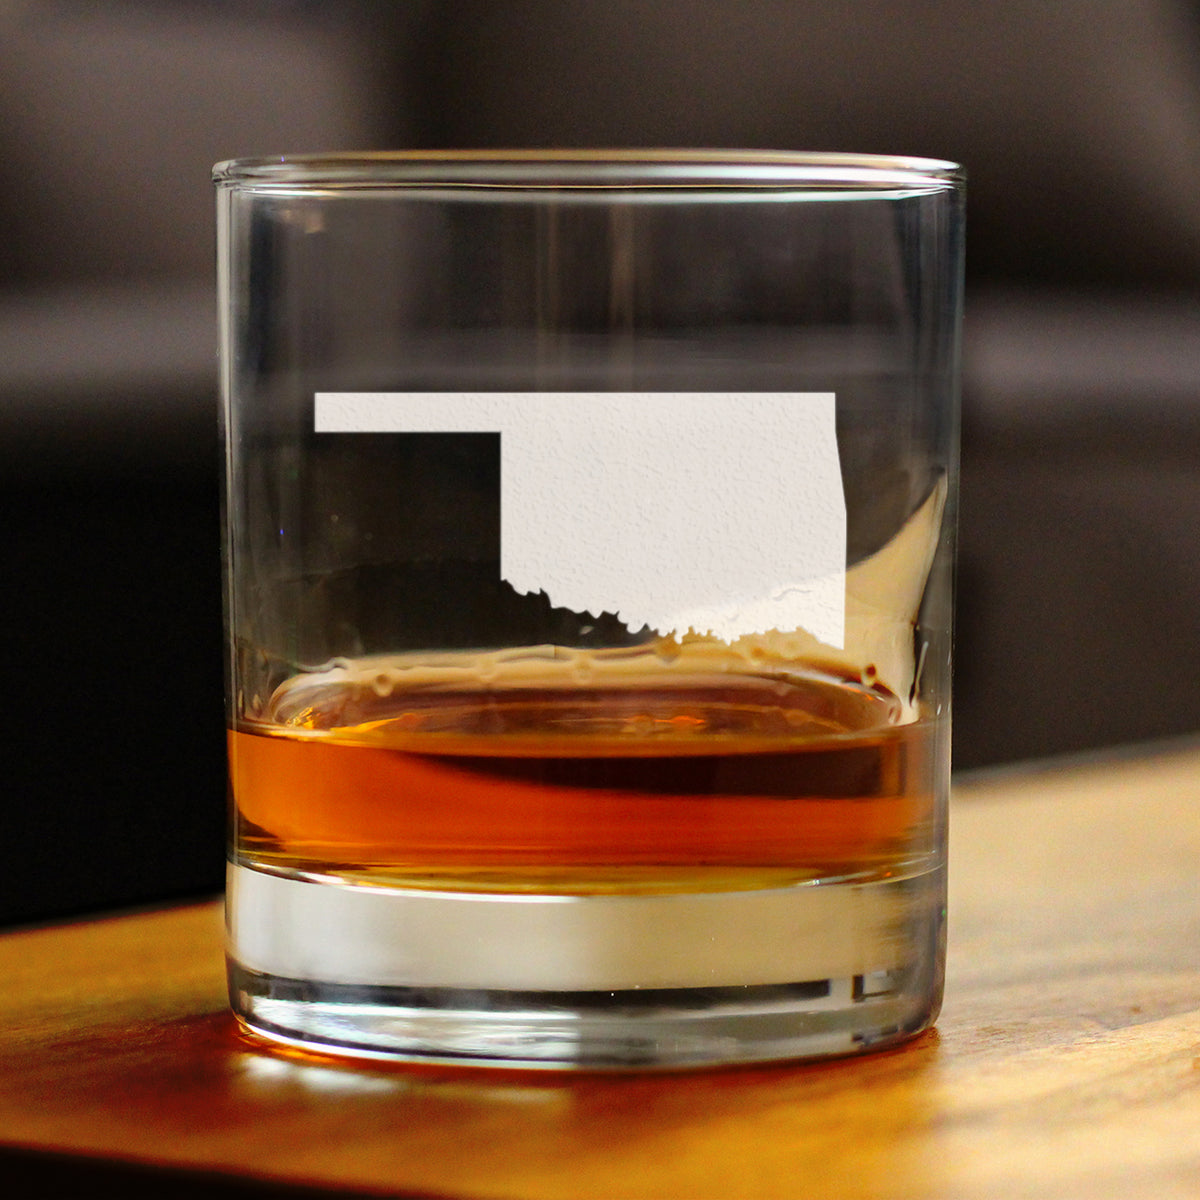 Oklahoma State Outline Whiskey Rocks Glass - State Themed Drinking Decor and Gifts for Oklahoman Women &amp; Men - 10.25 Oz Whisky Tumbler Glasses